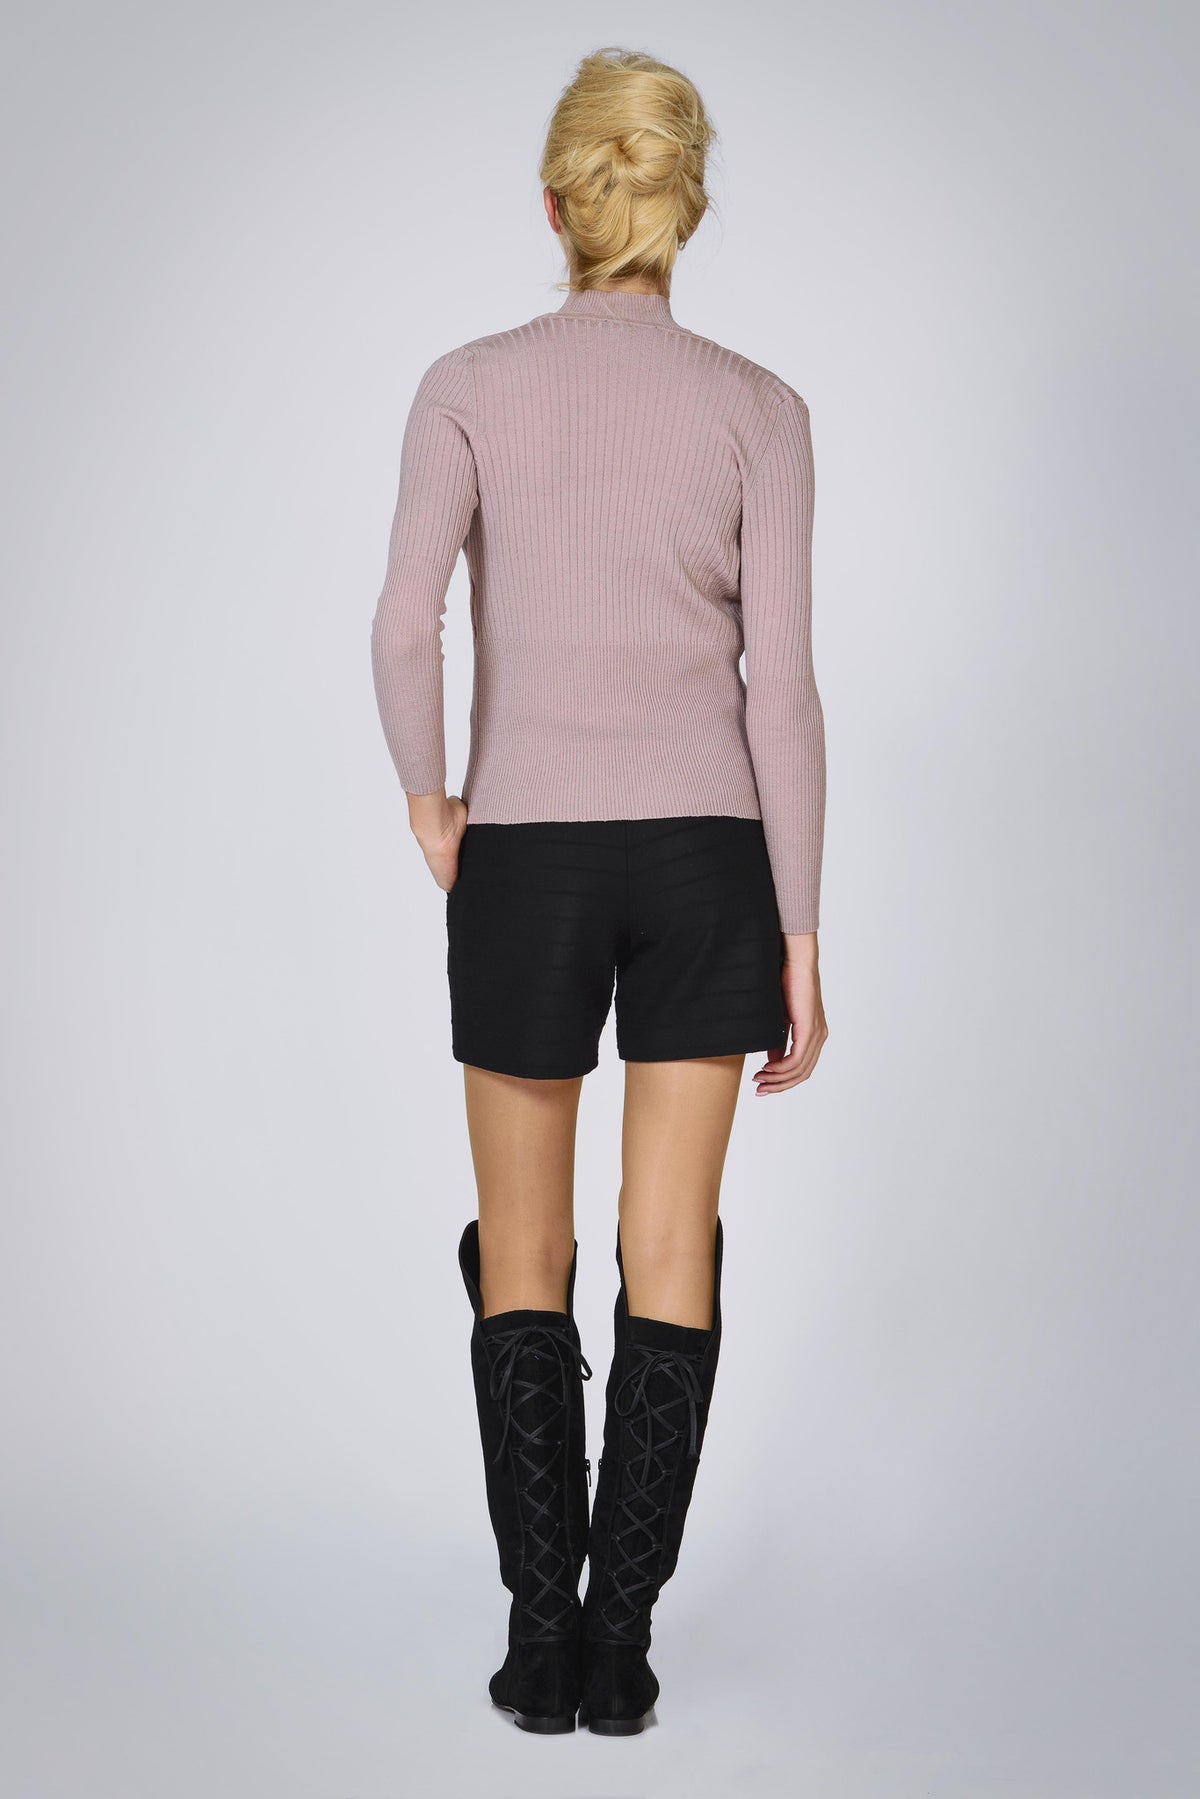 Powder pink wool cardigan and sleeveless top